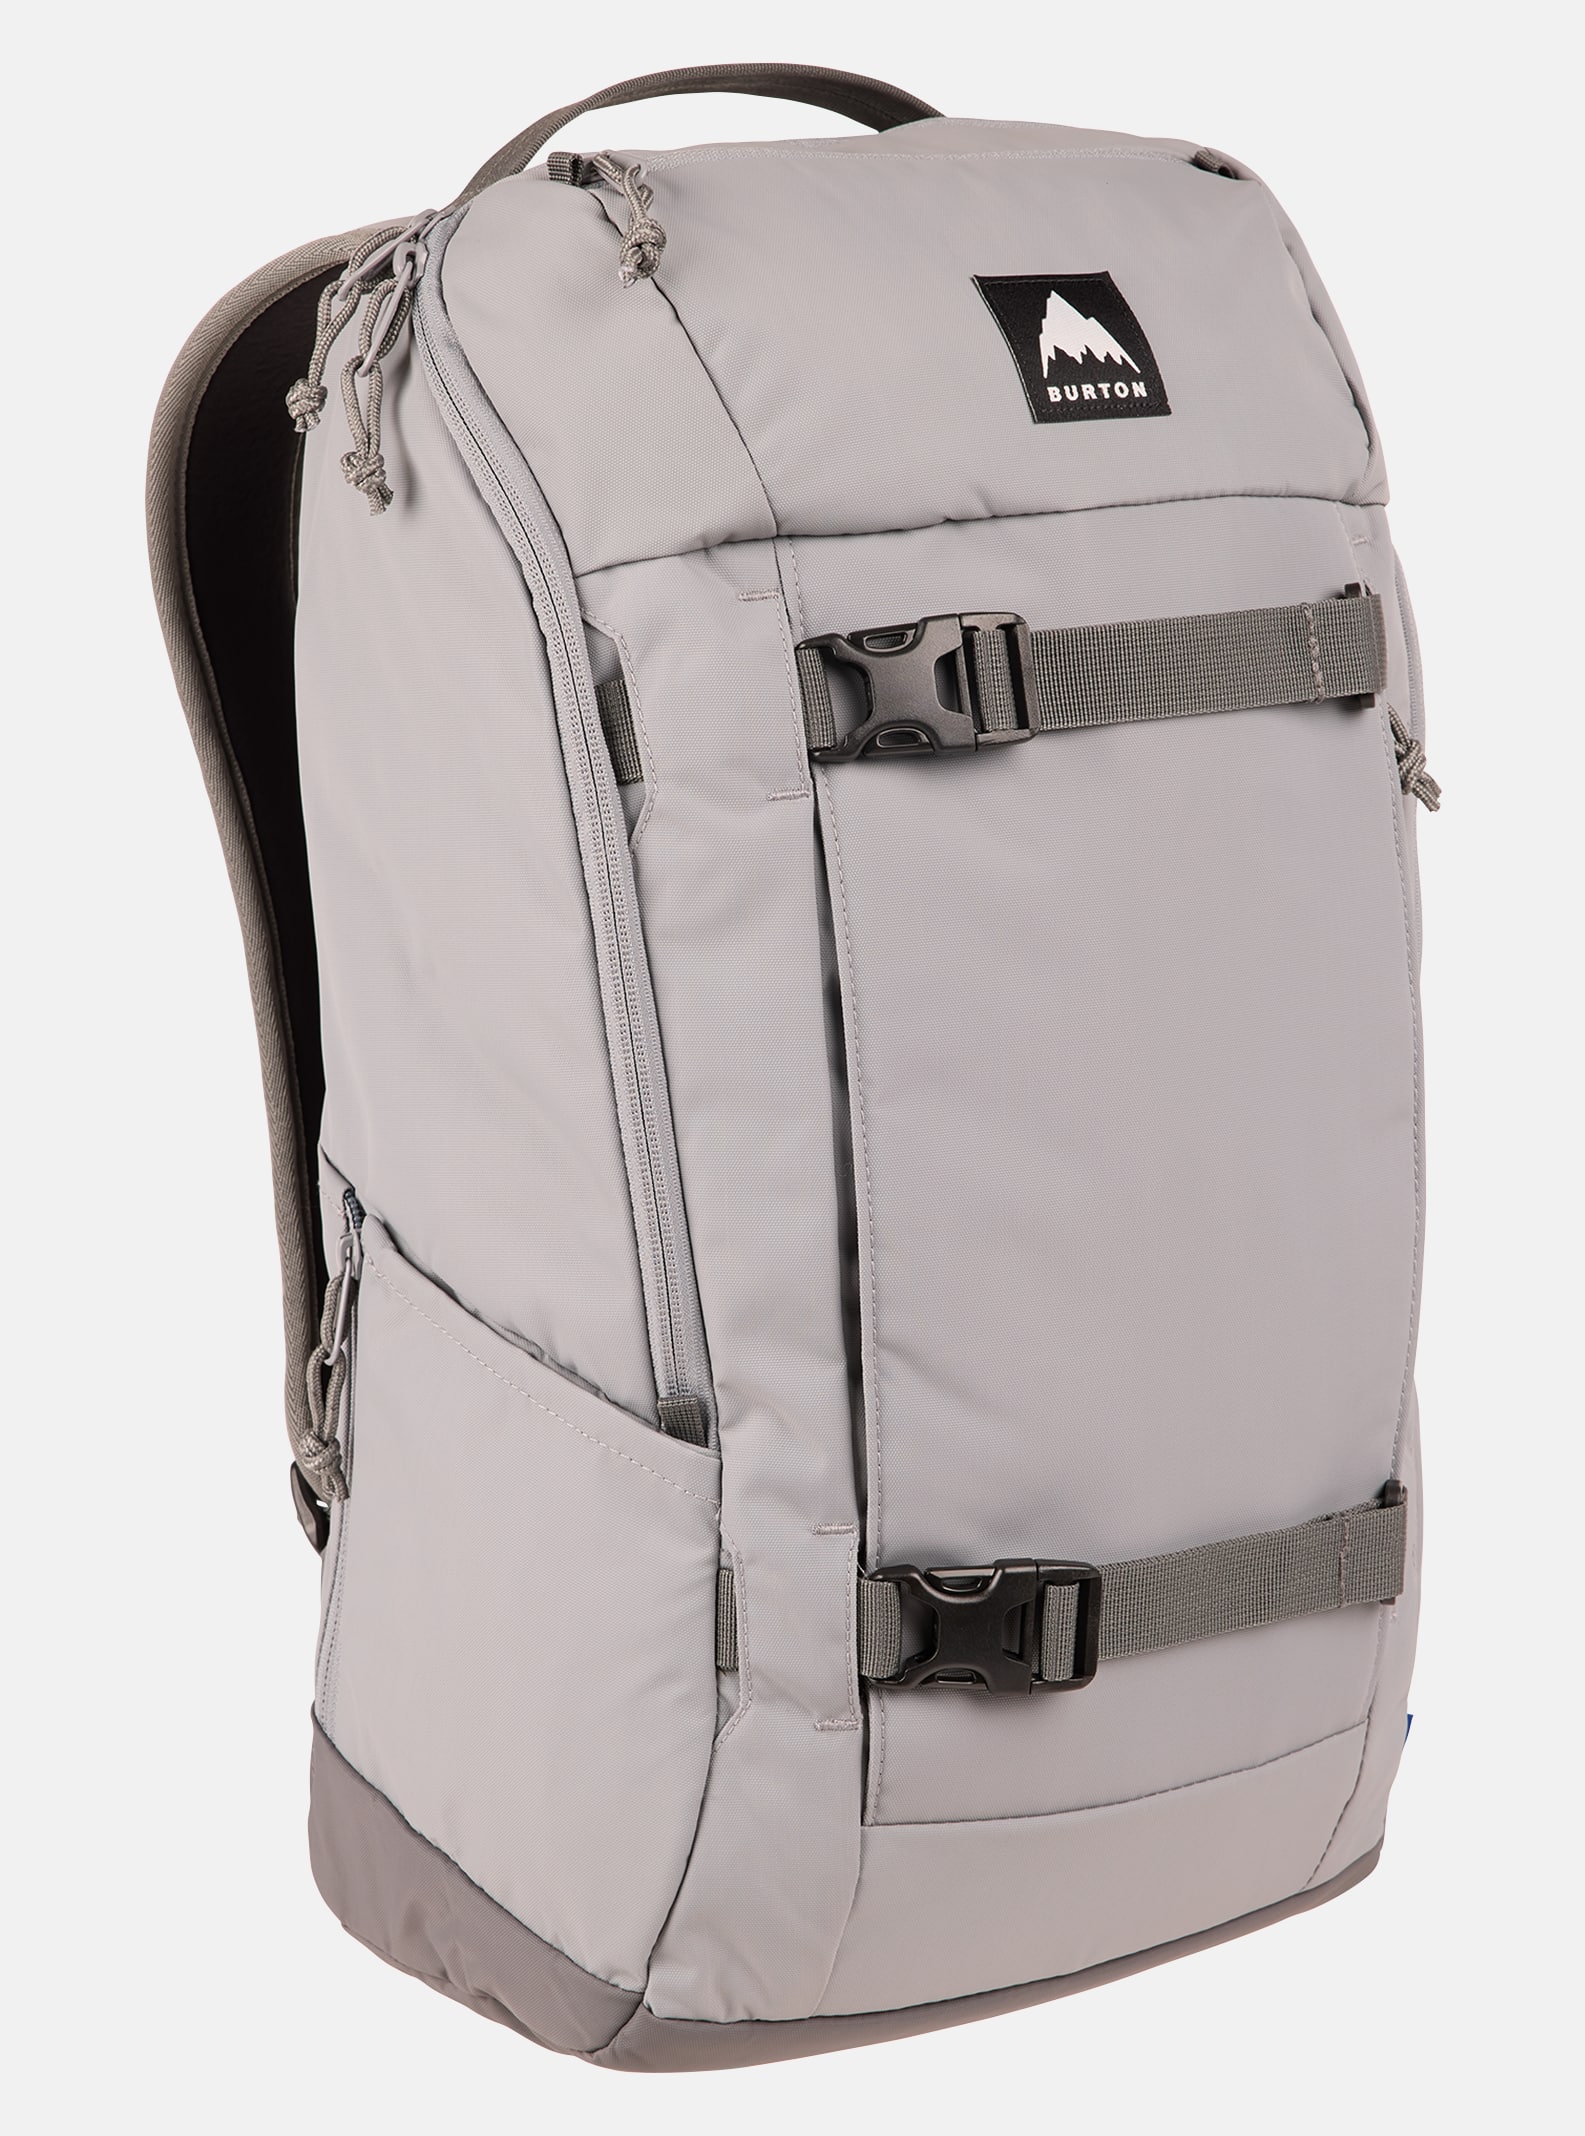 Backpacks | Burton Snowboards US